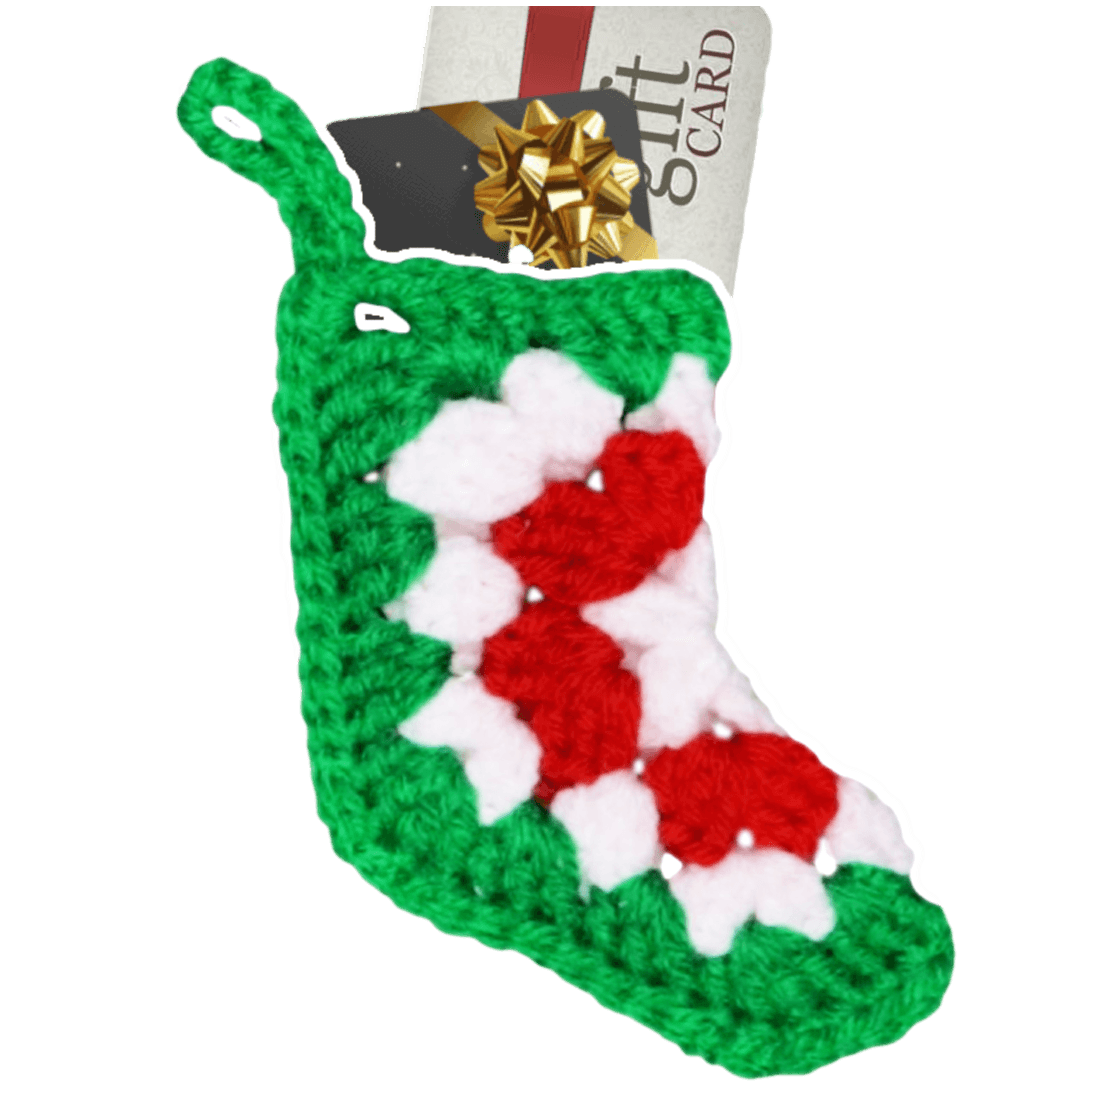 Crochet Gift Card Holder Stocking - The Secret Yarnery